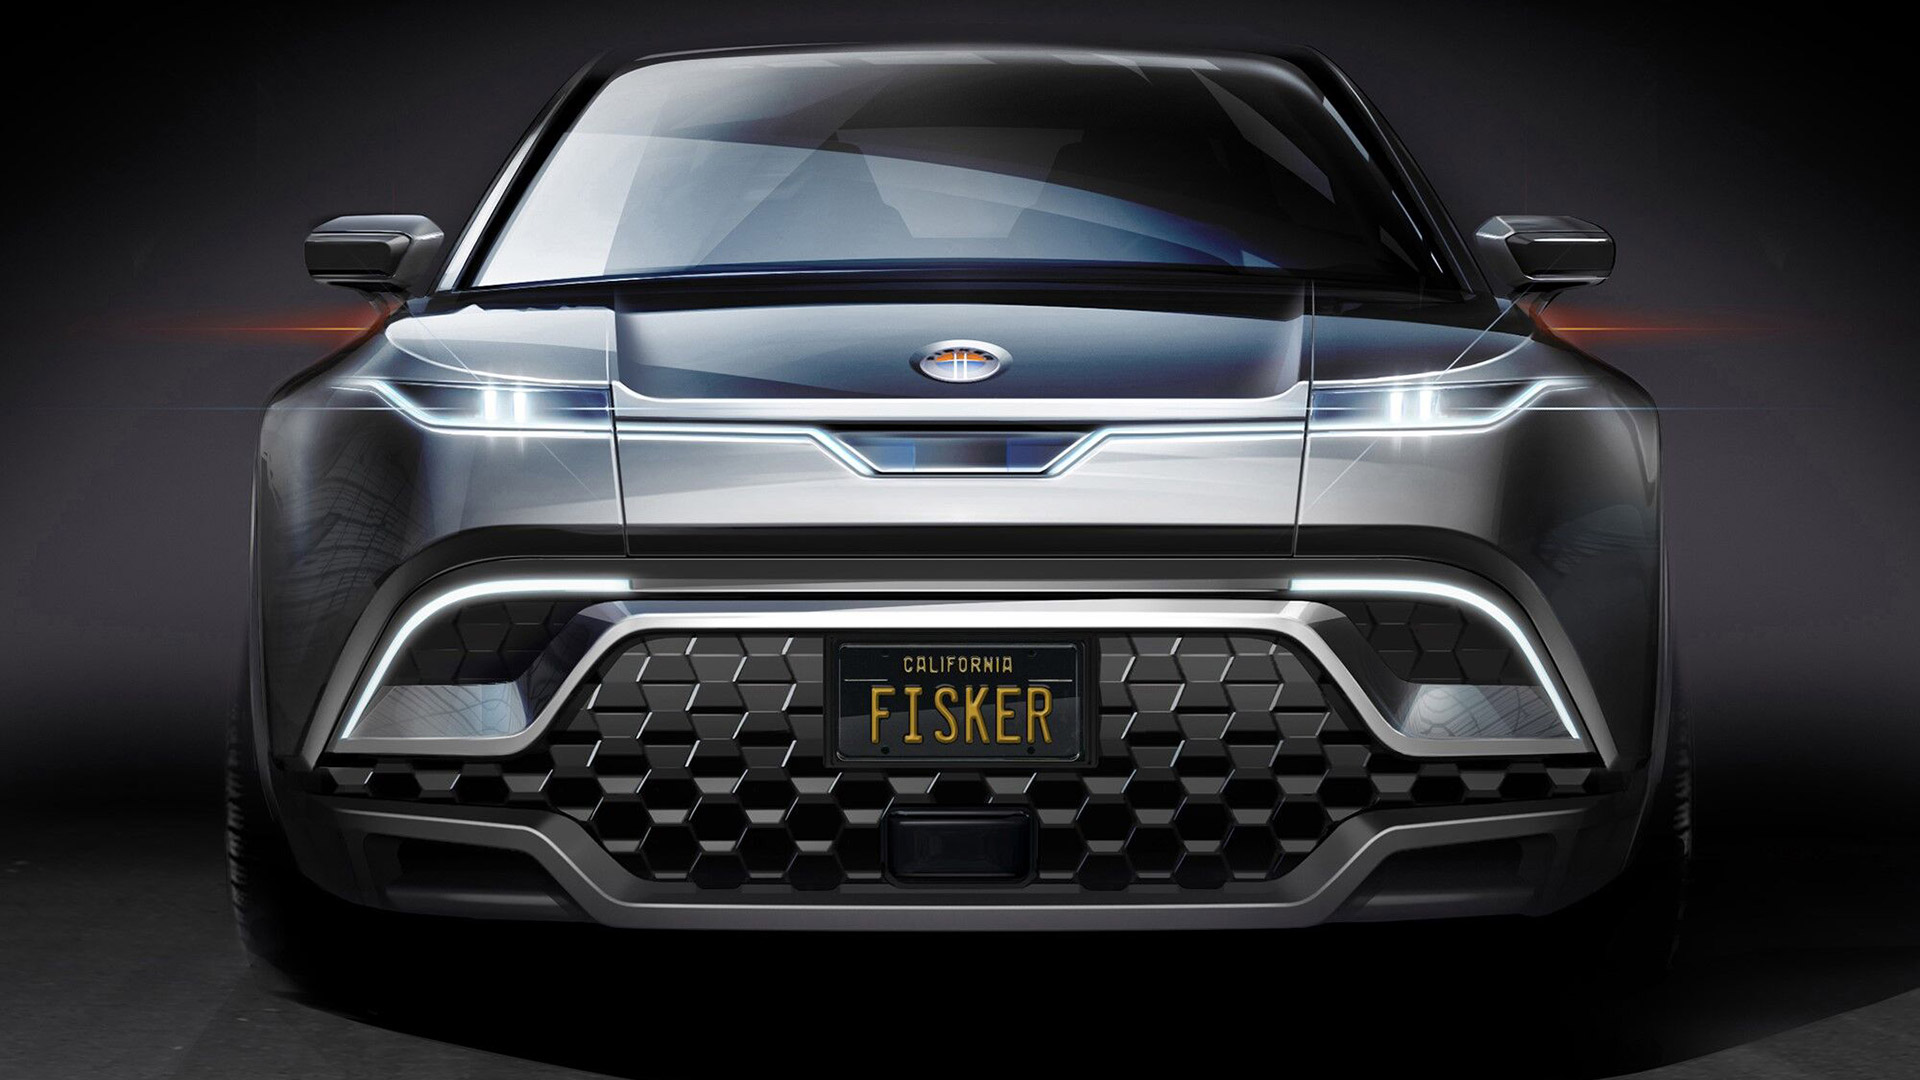 2021 Fisker new electric luxury SUV